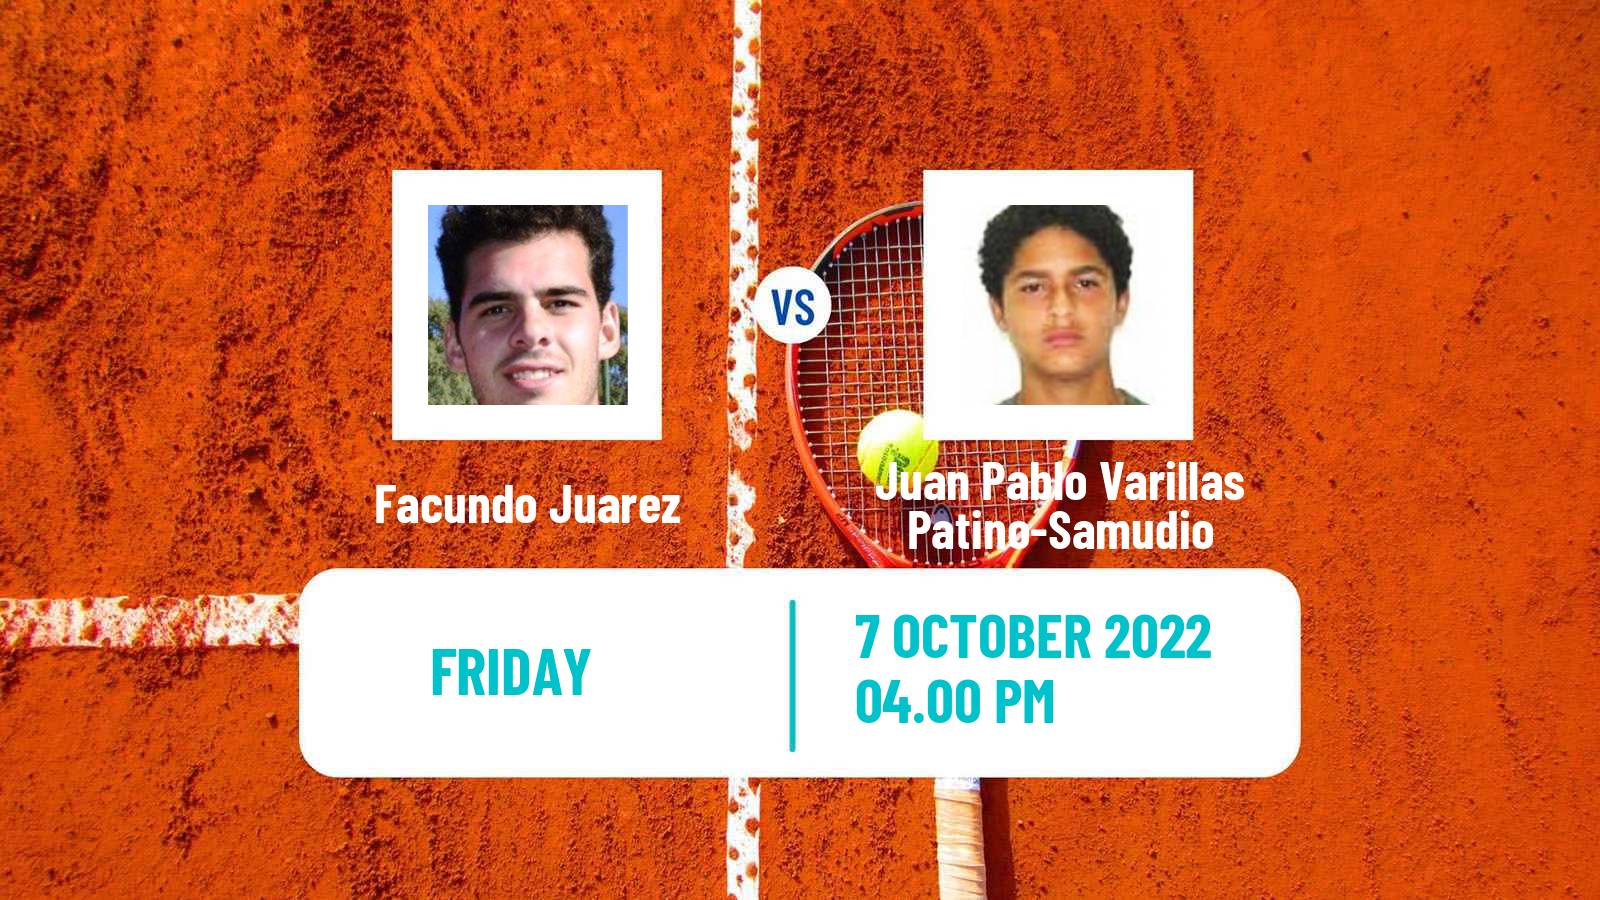 Tennis ATP Challenger Facundo Juarez - Juan Pablo Varillas Patino-Samudio